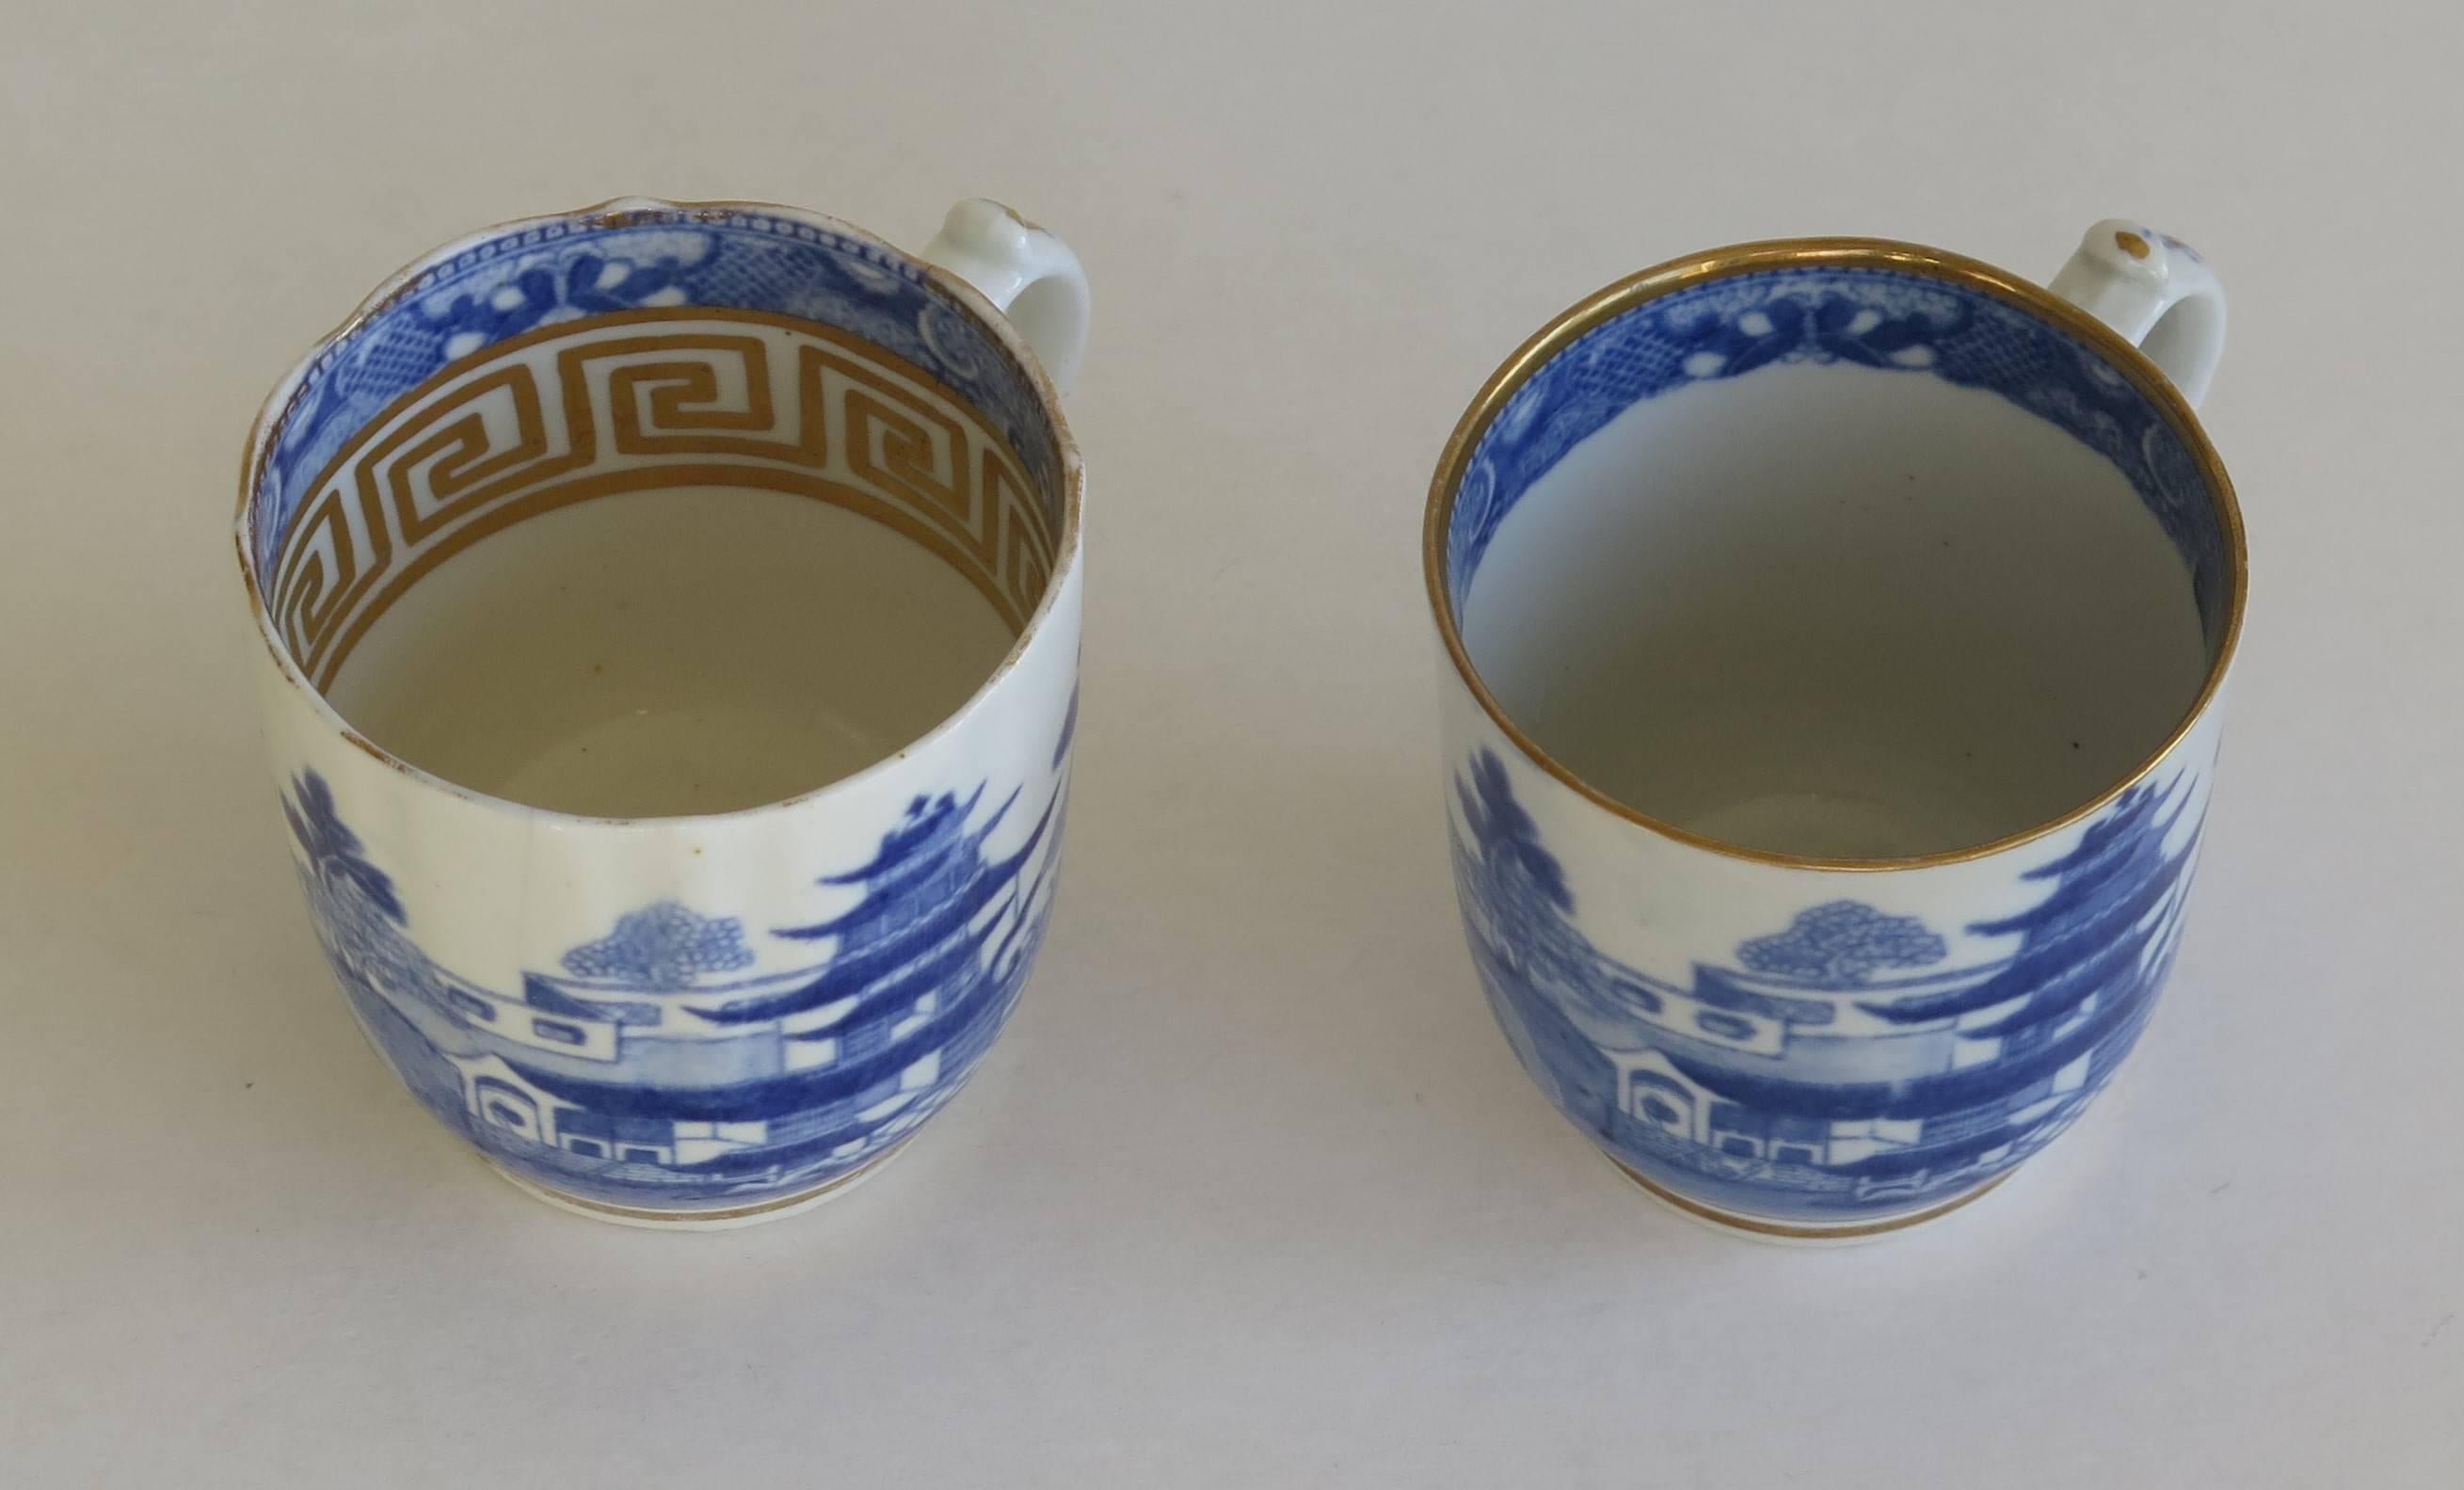 Similar PAIR of Miles Mason's Coffee Cans, Porcelain, Pagoda Pattern, circa 1800 1